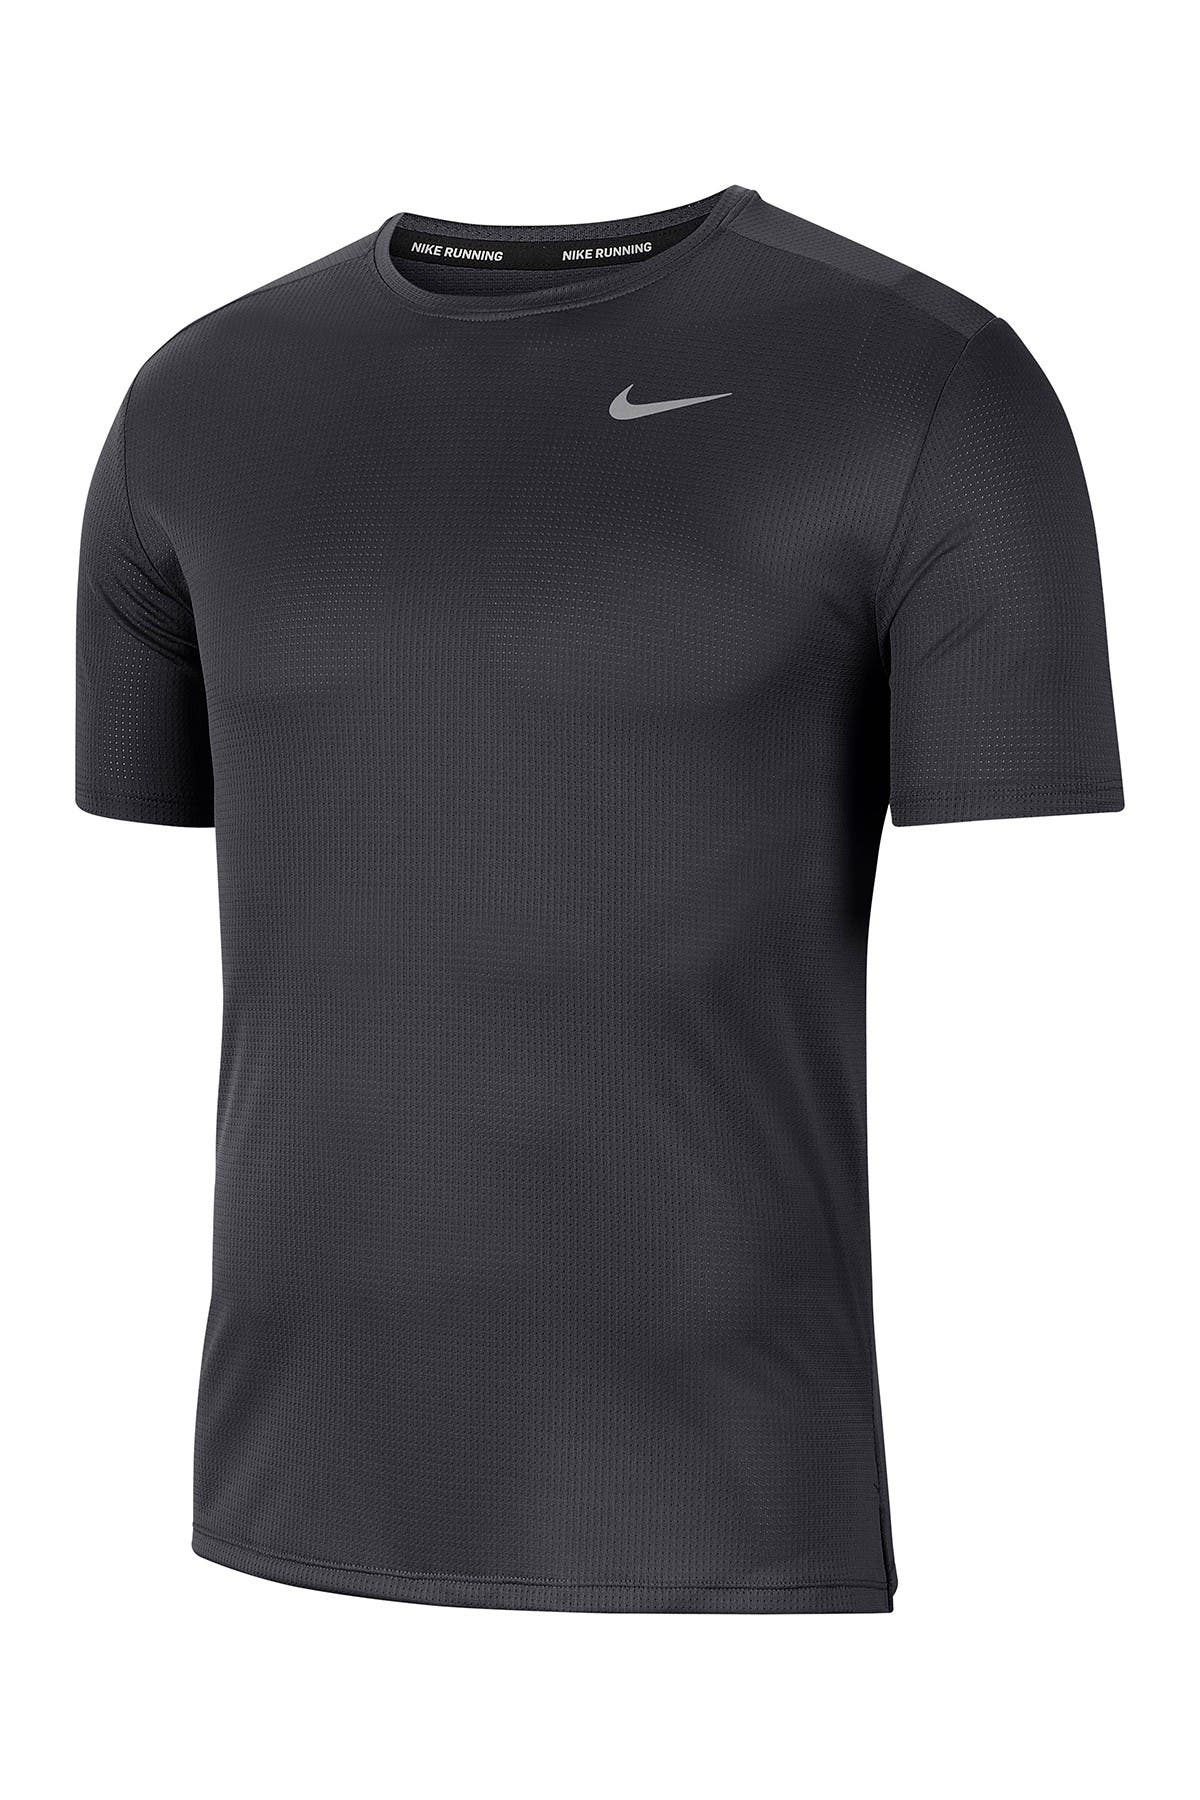 Nike Athletic \u0026 Workout Shirts for Men 